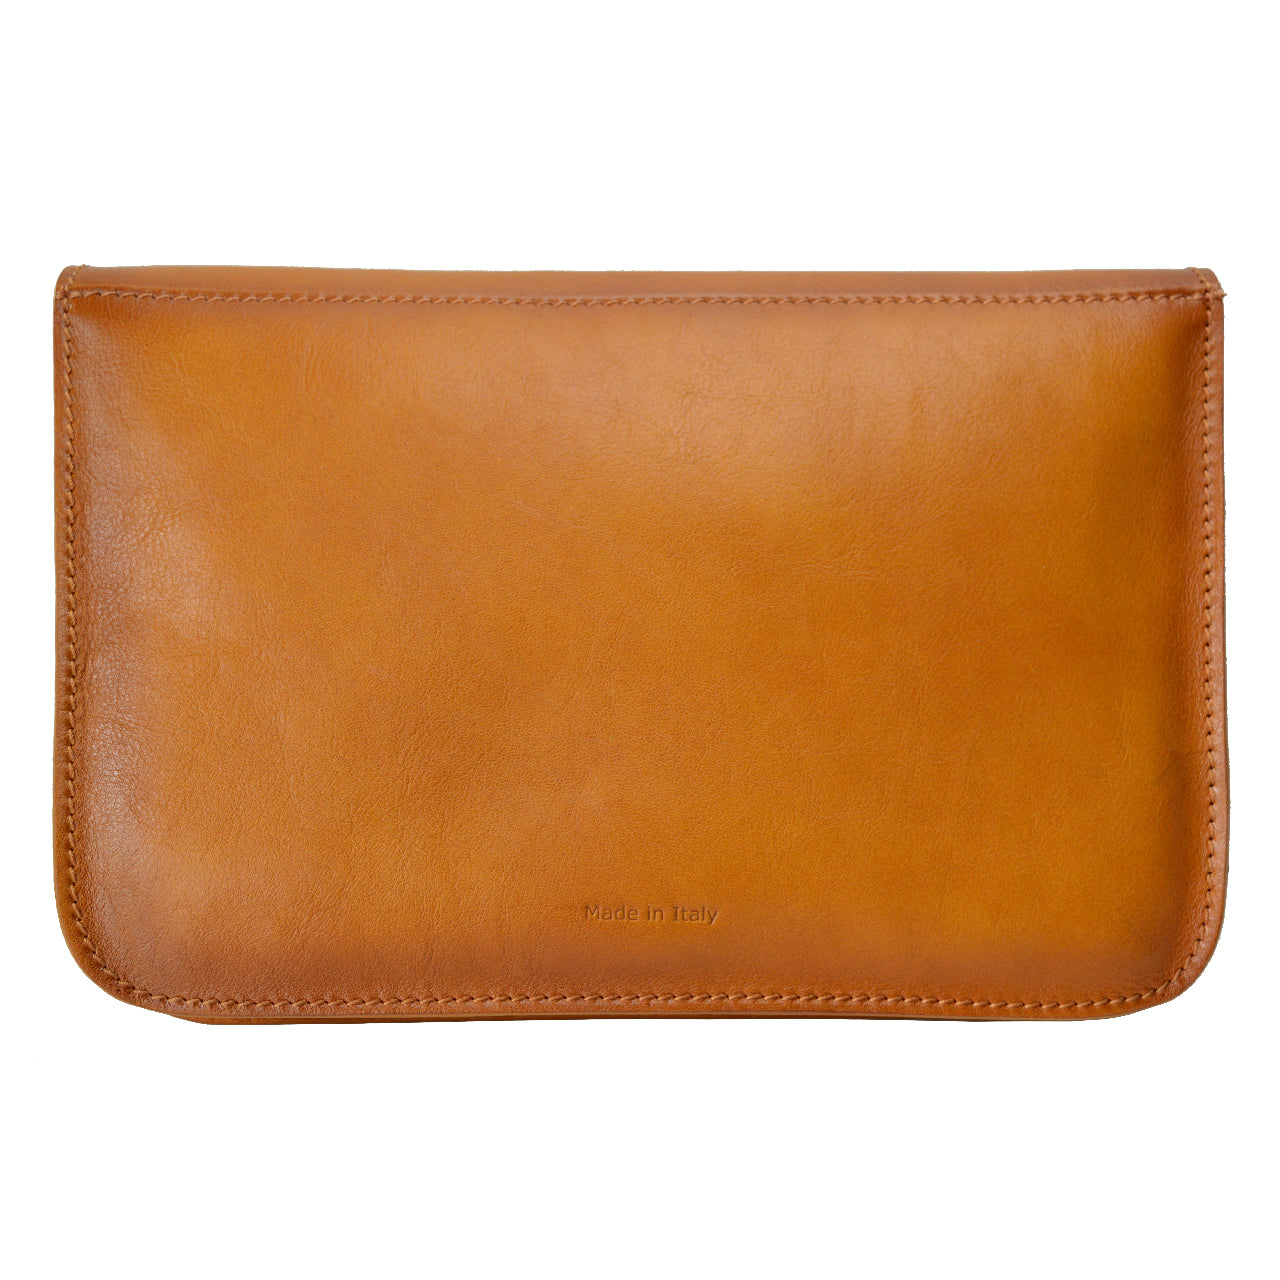 Pratesi Acone Woman Bag in genuine Italian leather - Acone Brown